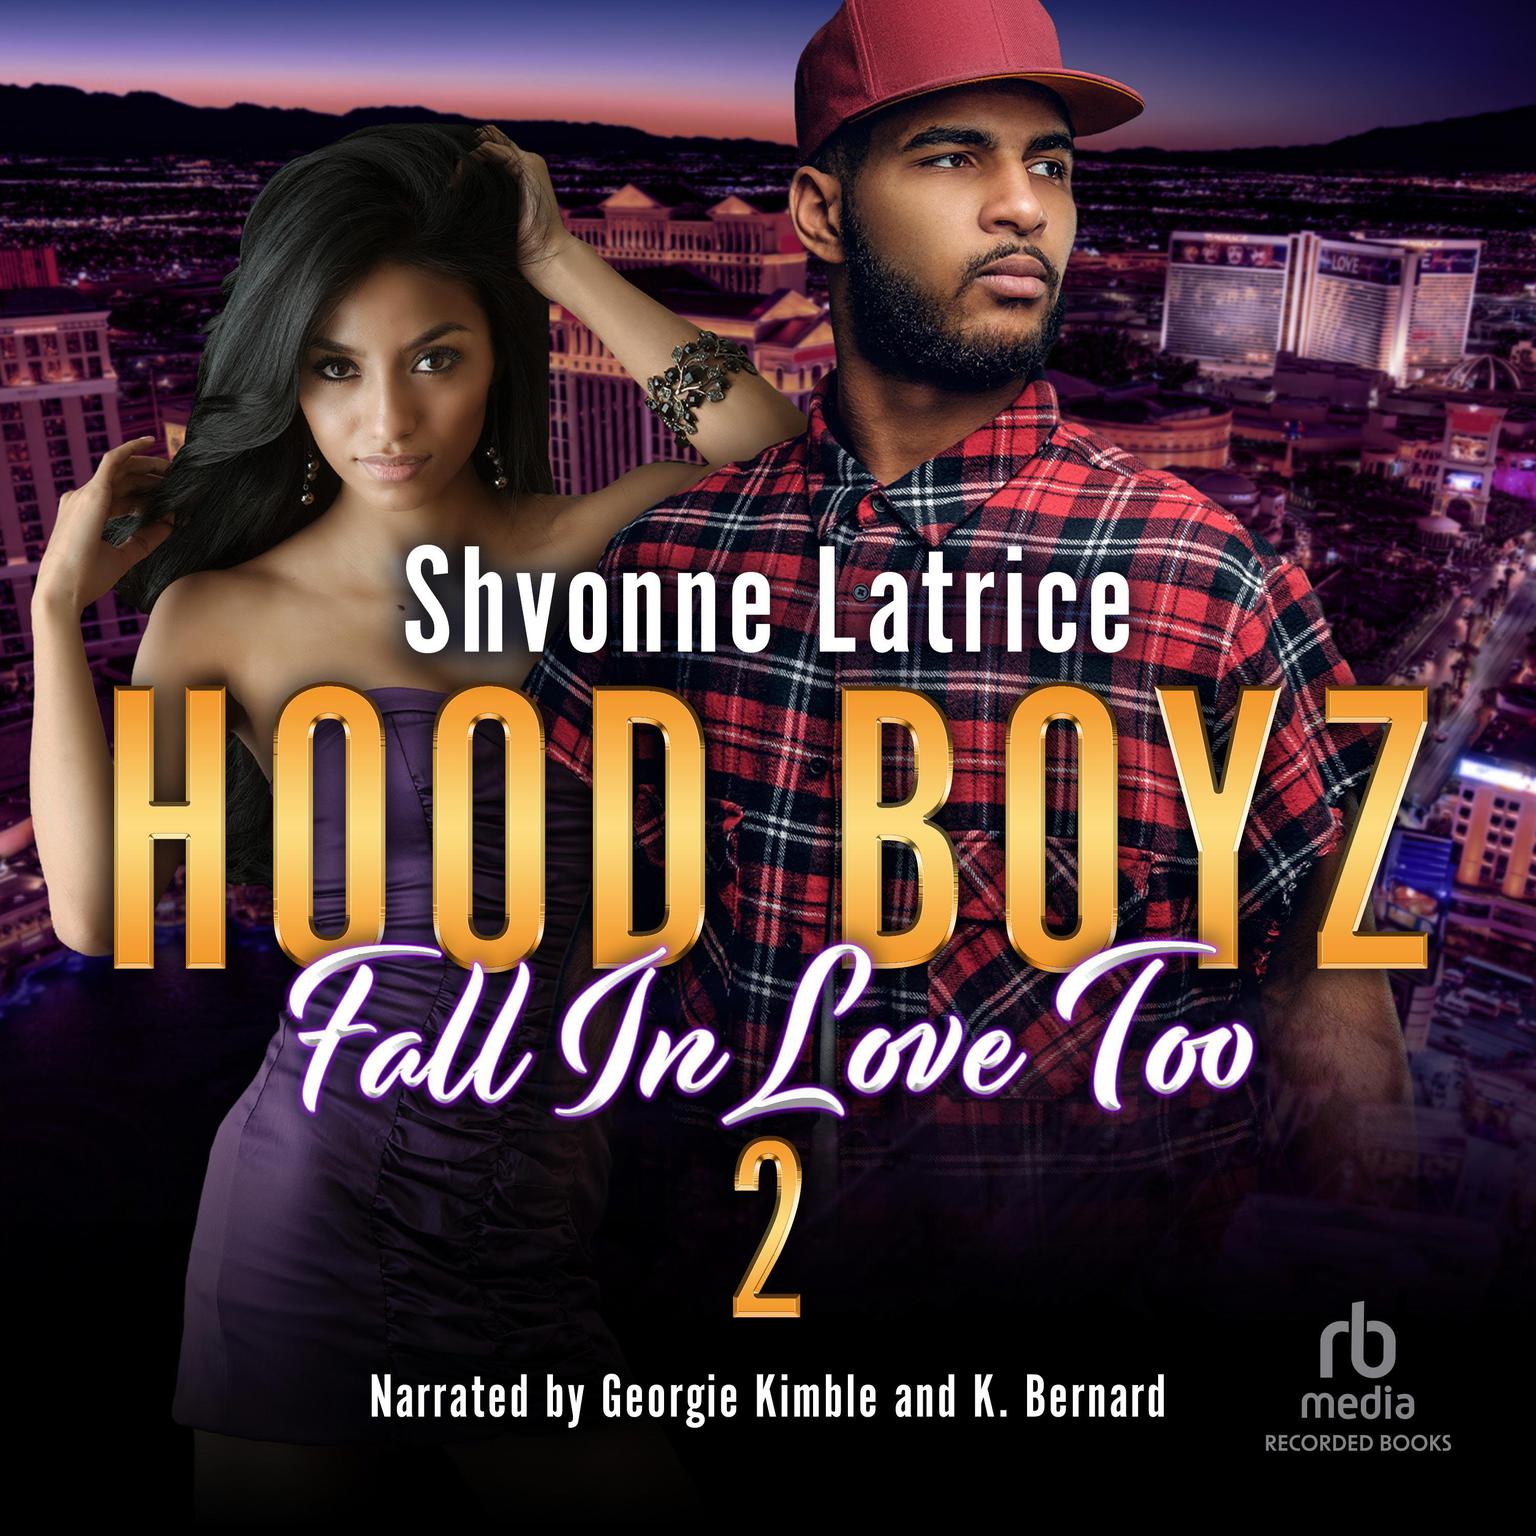 Hood Boyz Fall In Love Too 2 Audiobook, by Shvonne Latrice